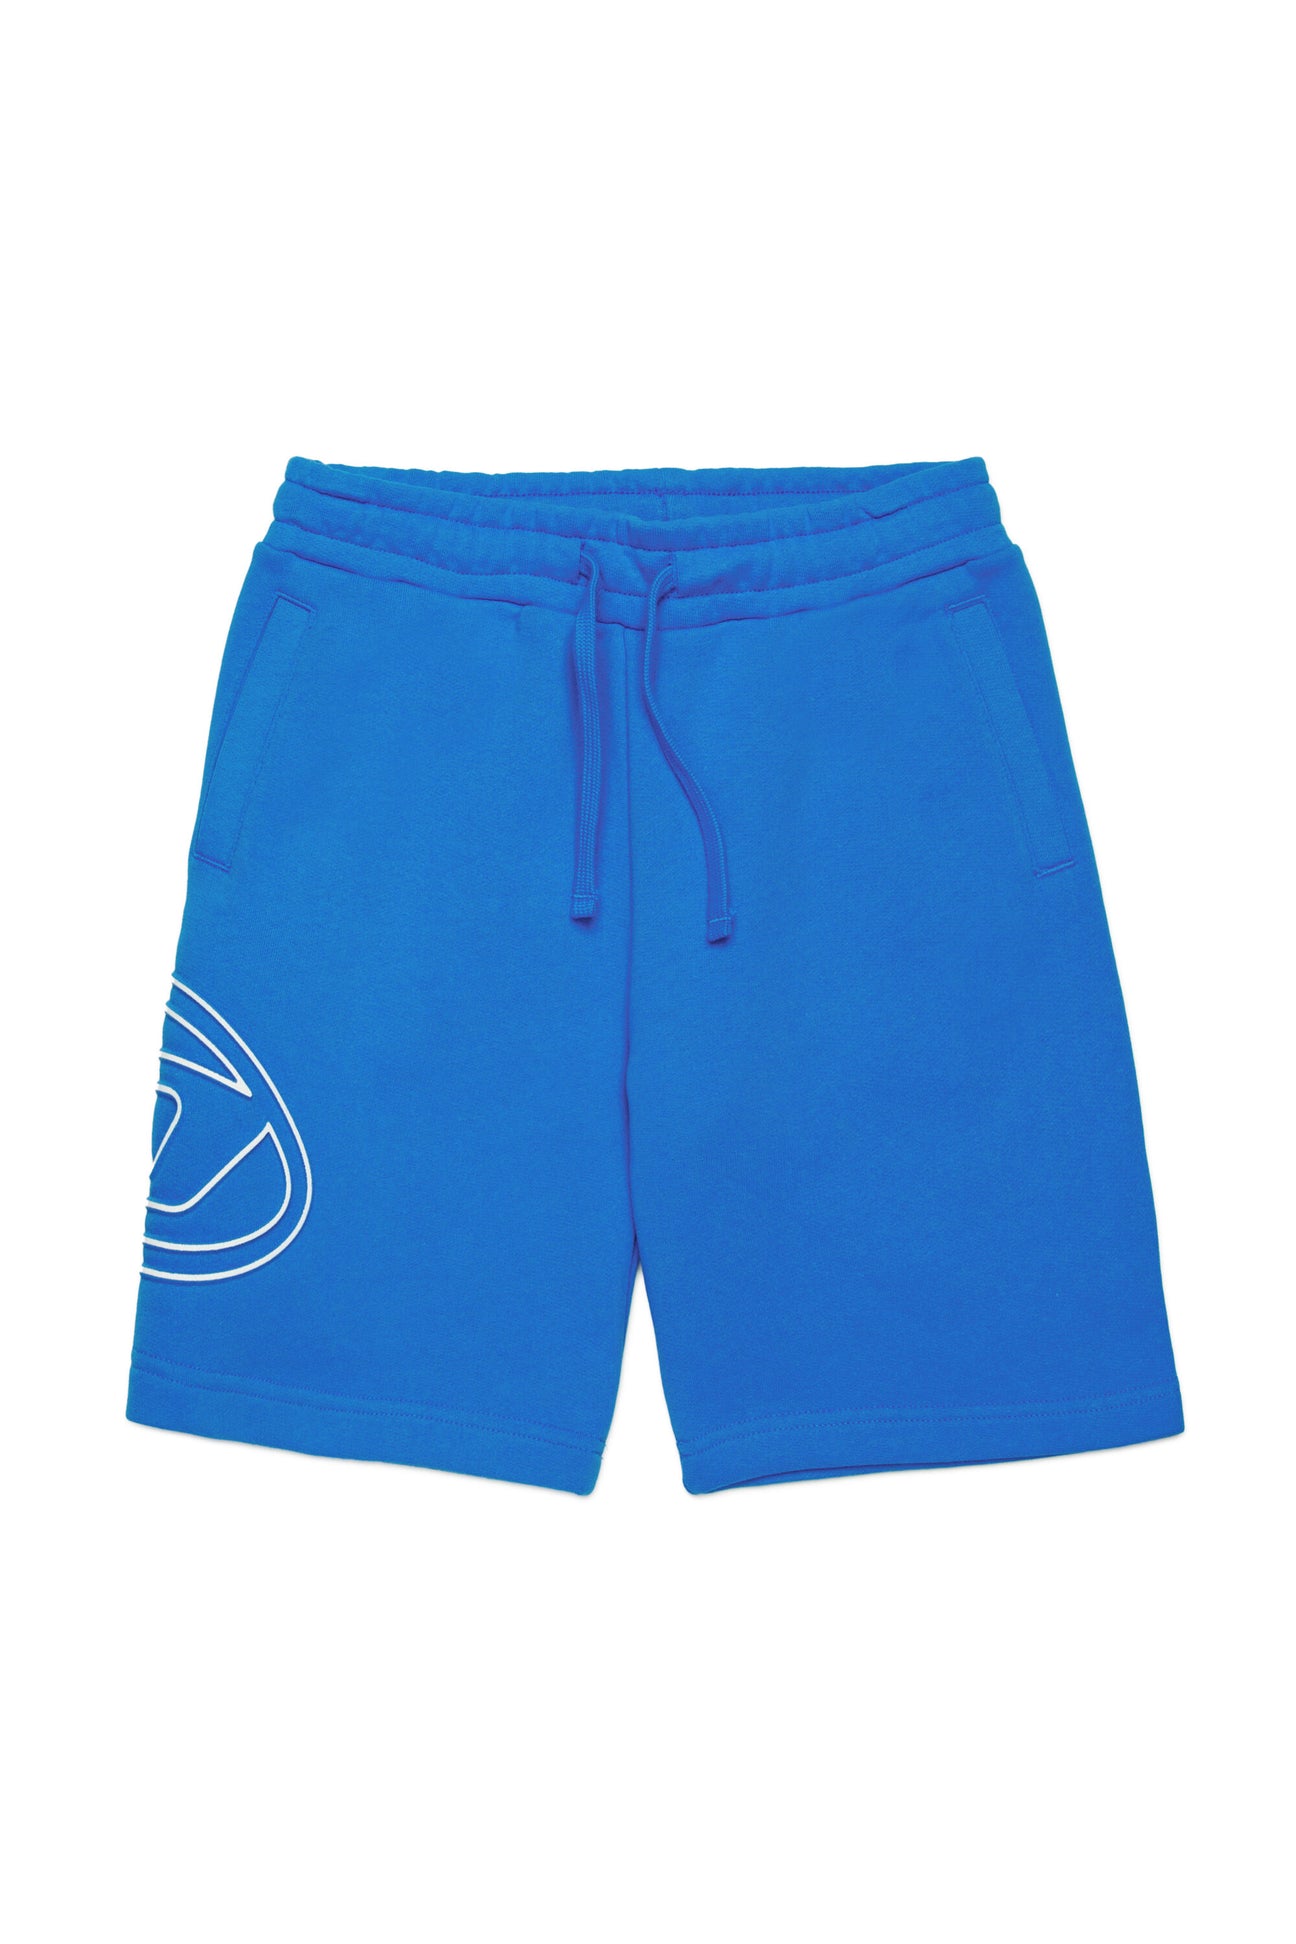 Shorts in felpa con logo Oval D 